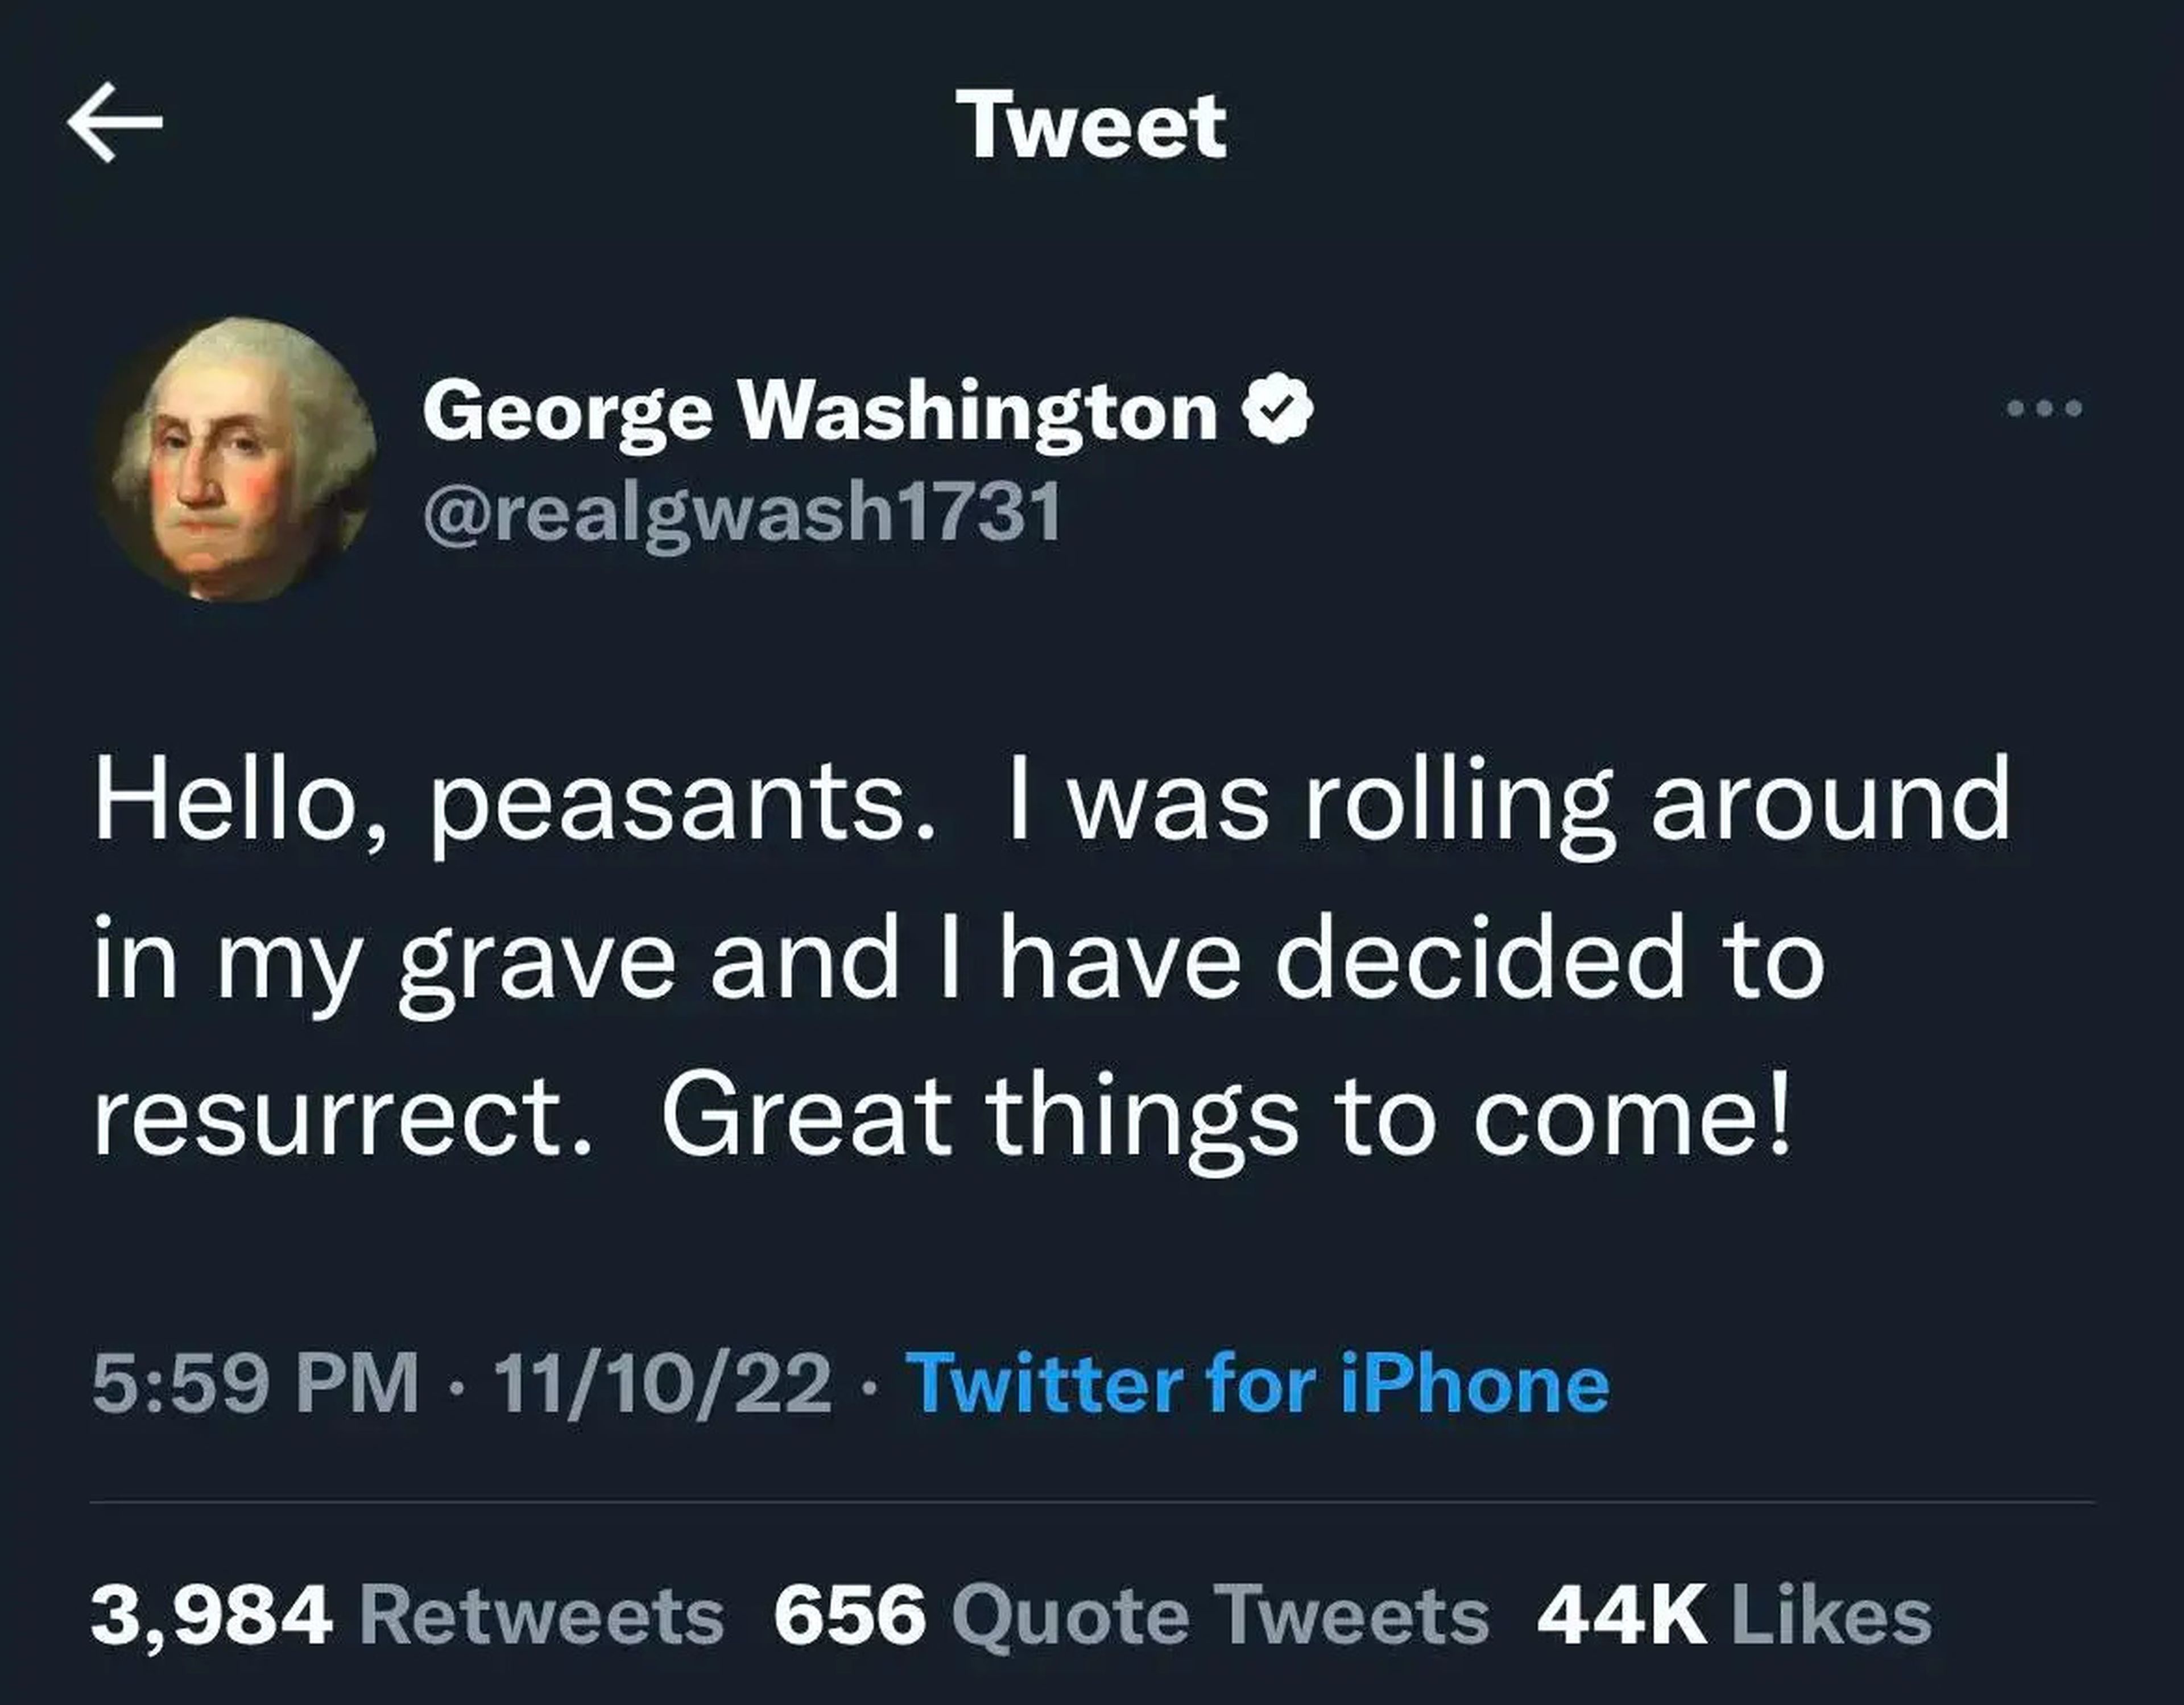 Tweet from George Washington impersonator